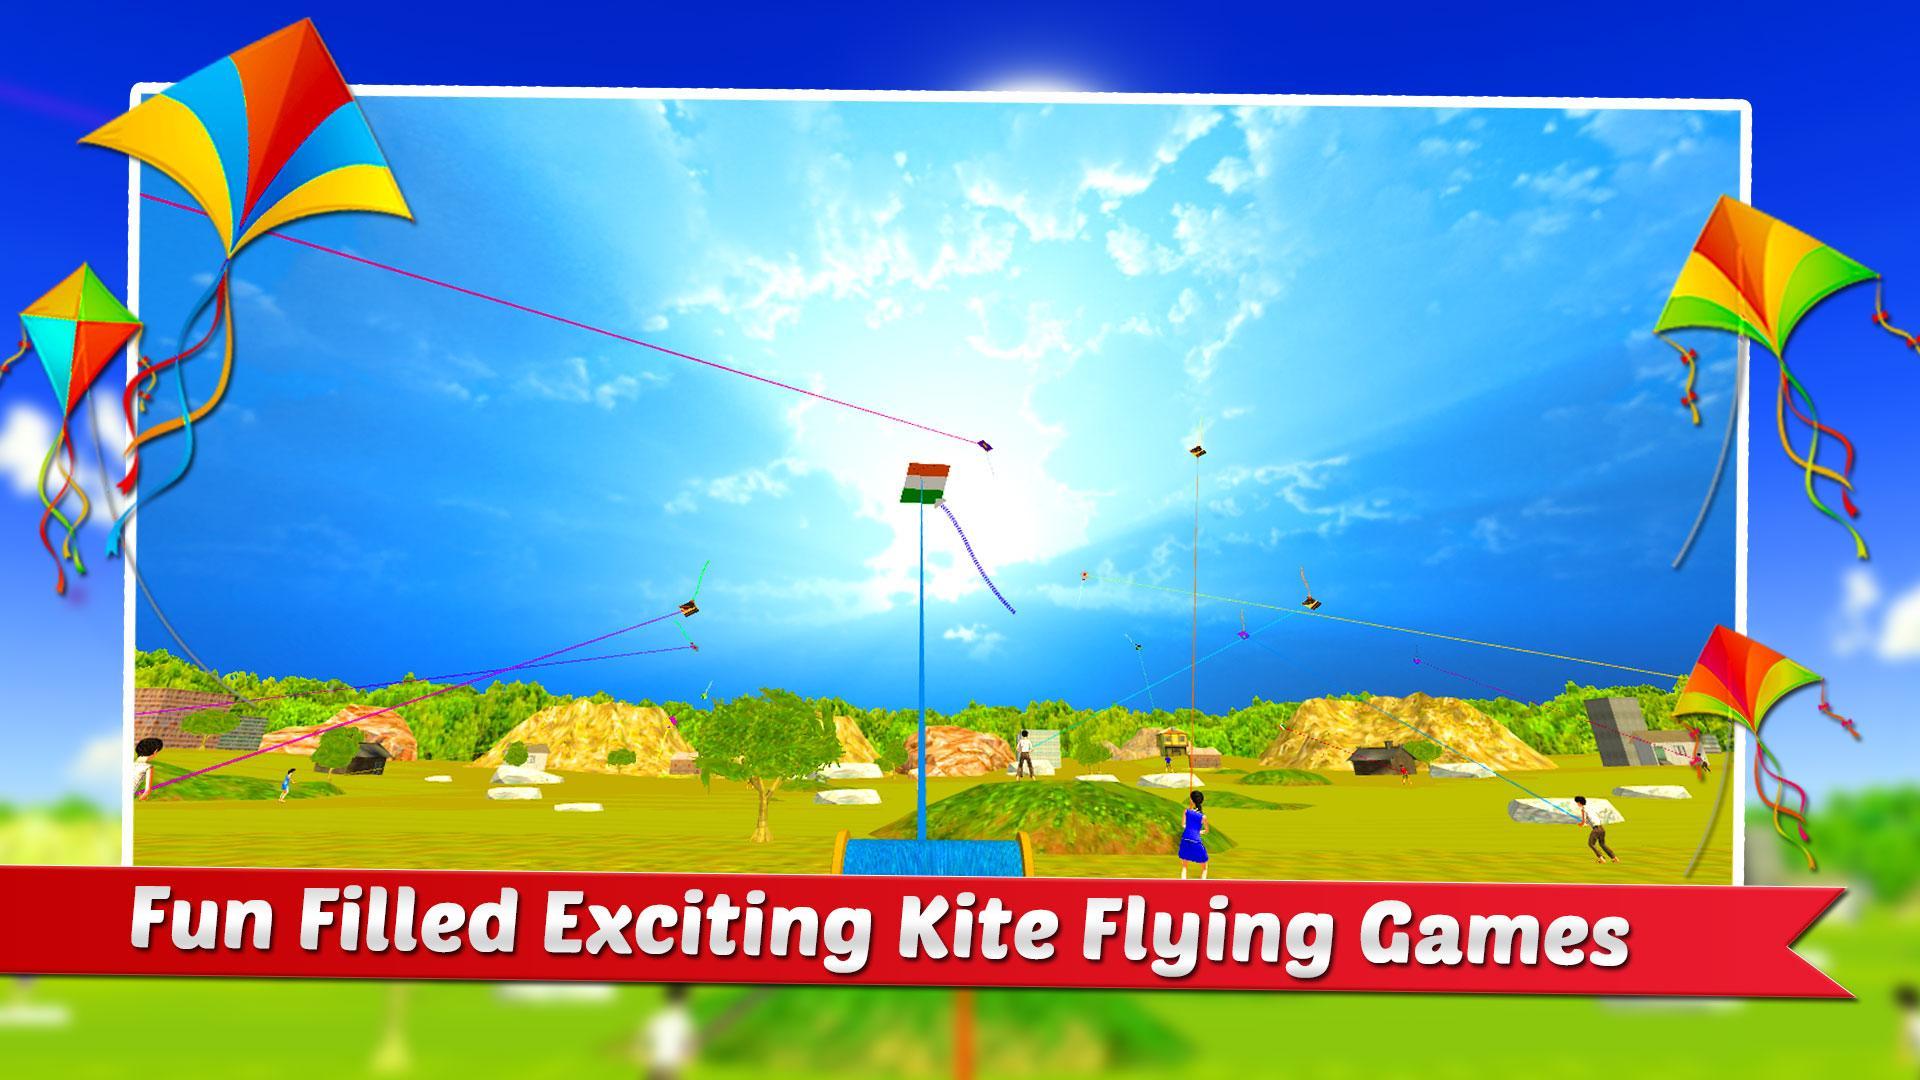 Flying a kite перевод на русский. Воздушный змей. The Kite игра. Воздушный змей игра на ПК. Воздушный змеи Супергерой.